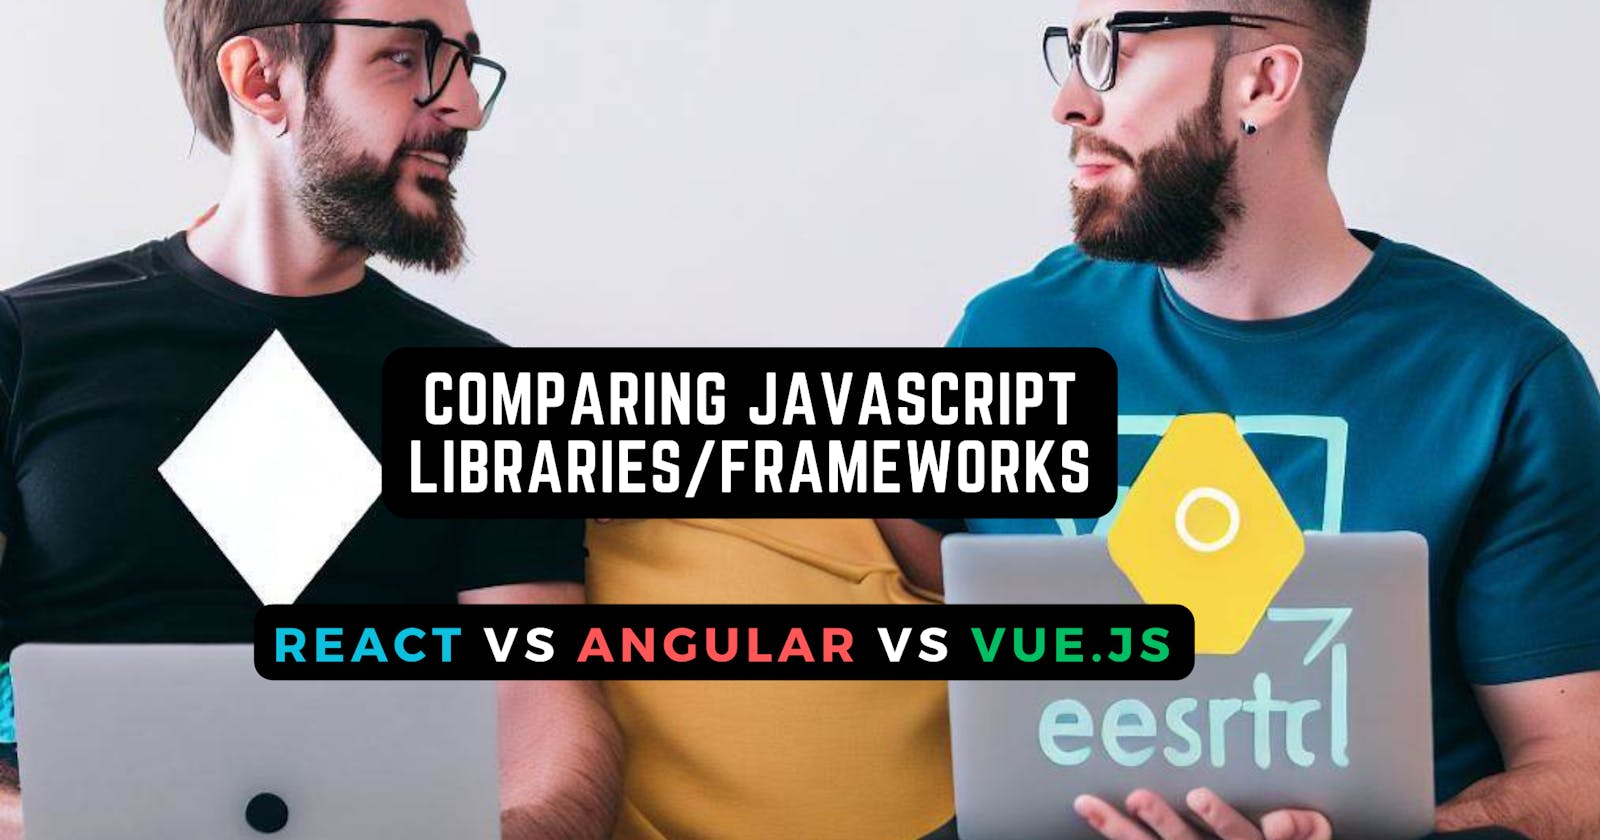 Comparing JavaScript Libraries/Frameworks: React vs Angular vs Vue.js